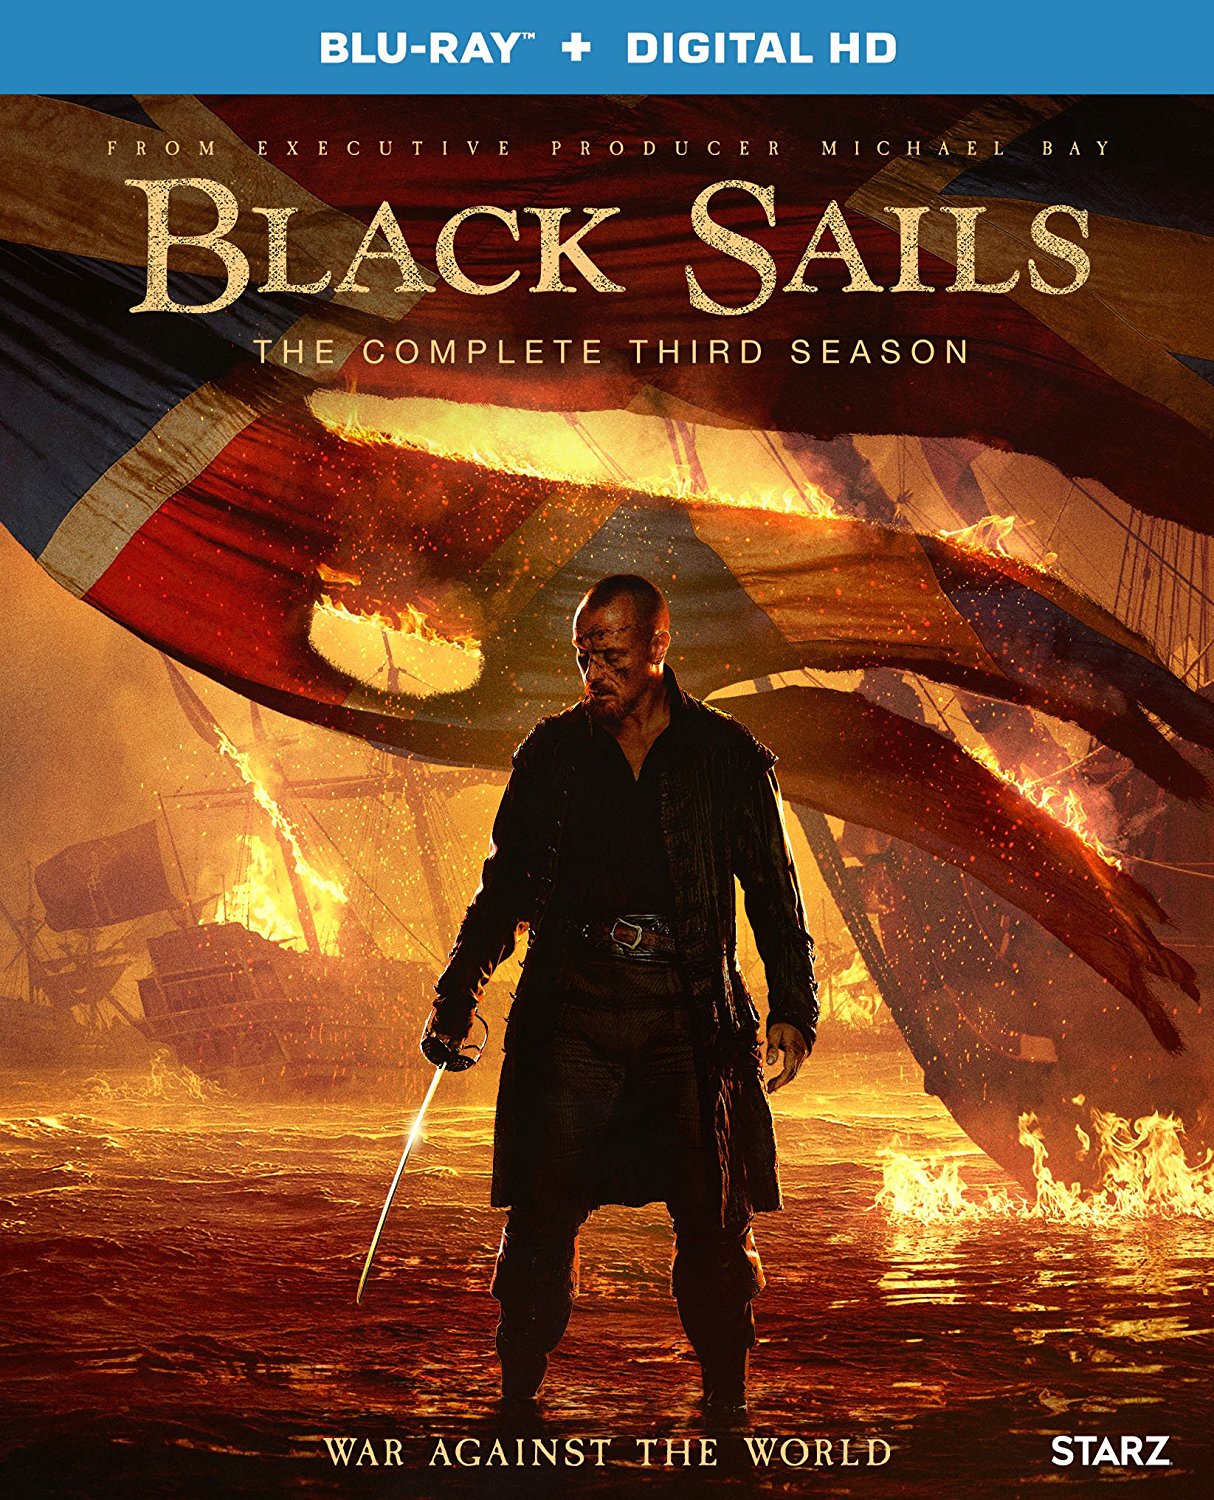 Black Sails Season 3 Blu-ray Cover